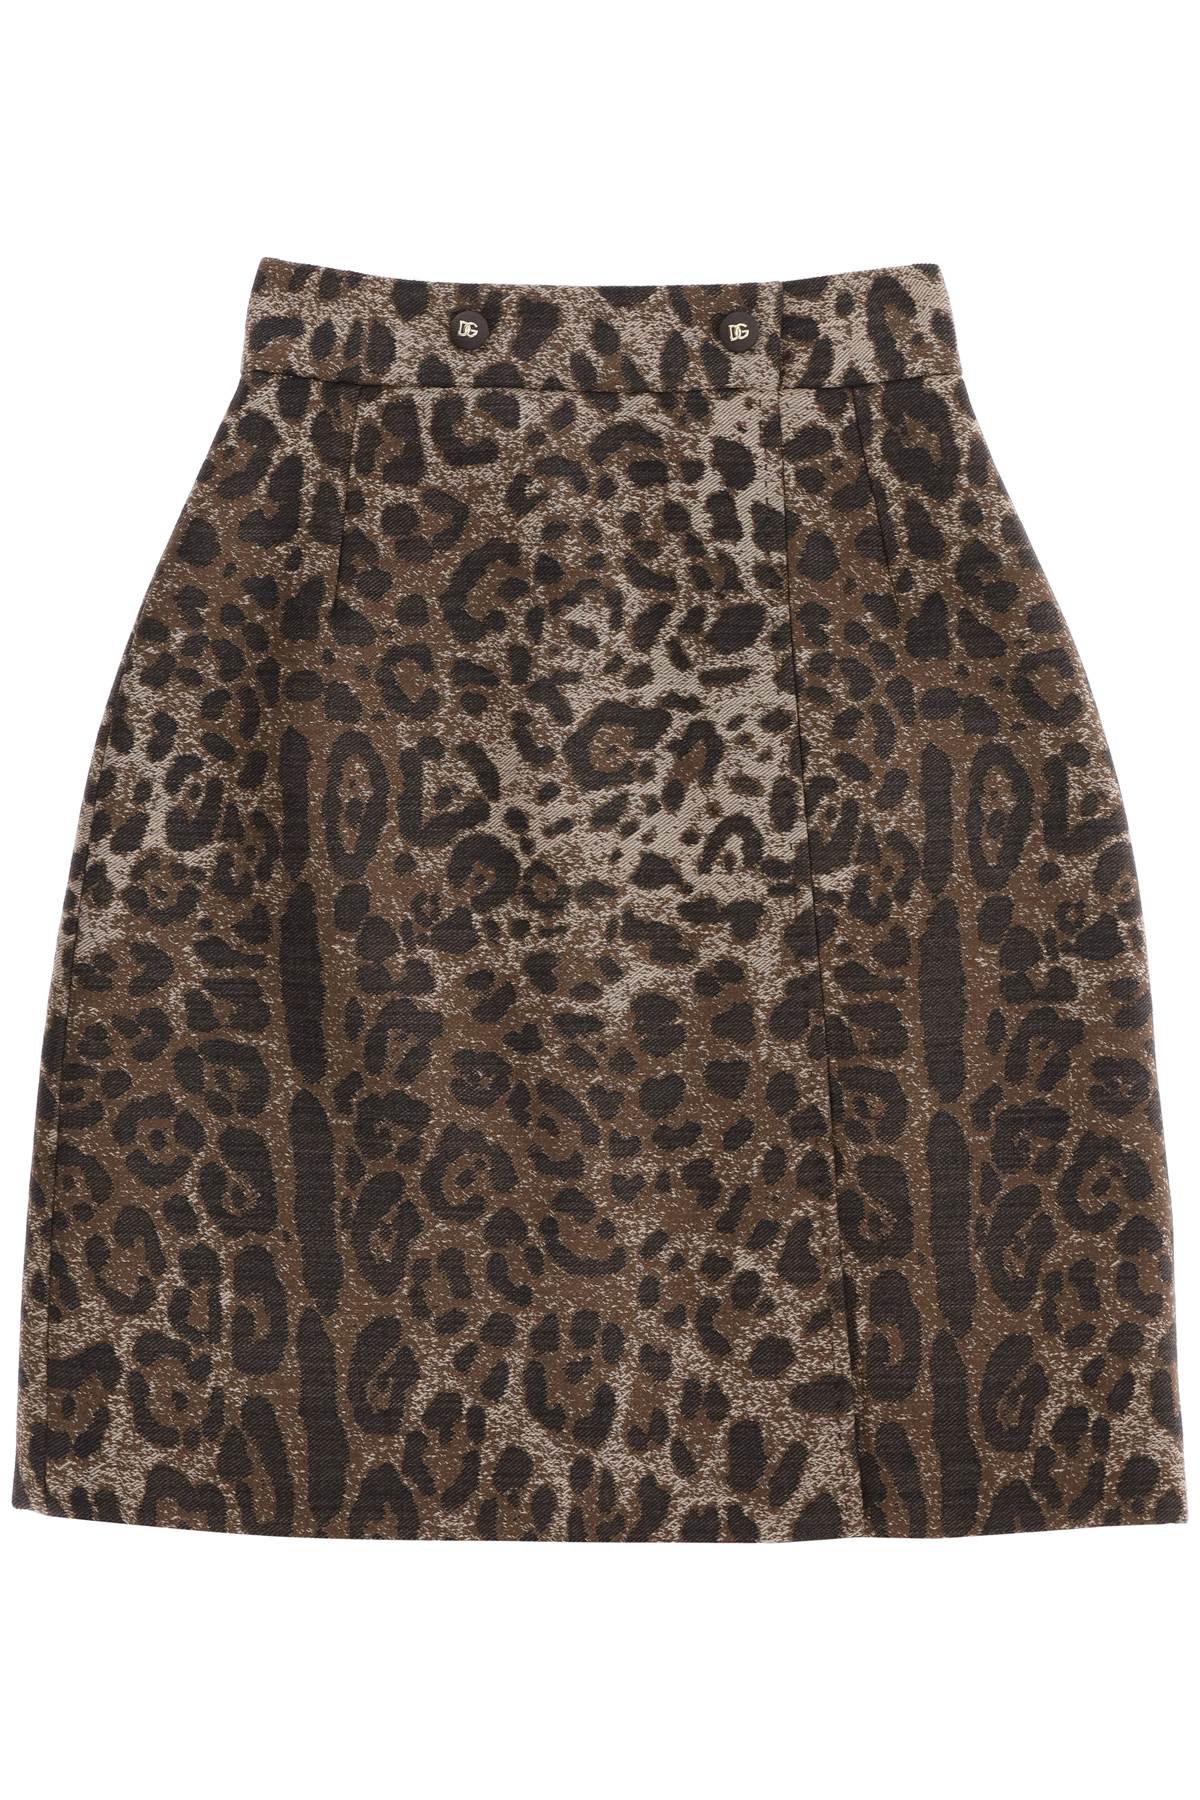 Dolce & gabbana wool jacquard skirt with leopard motif-0